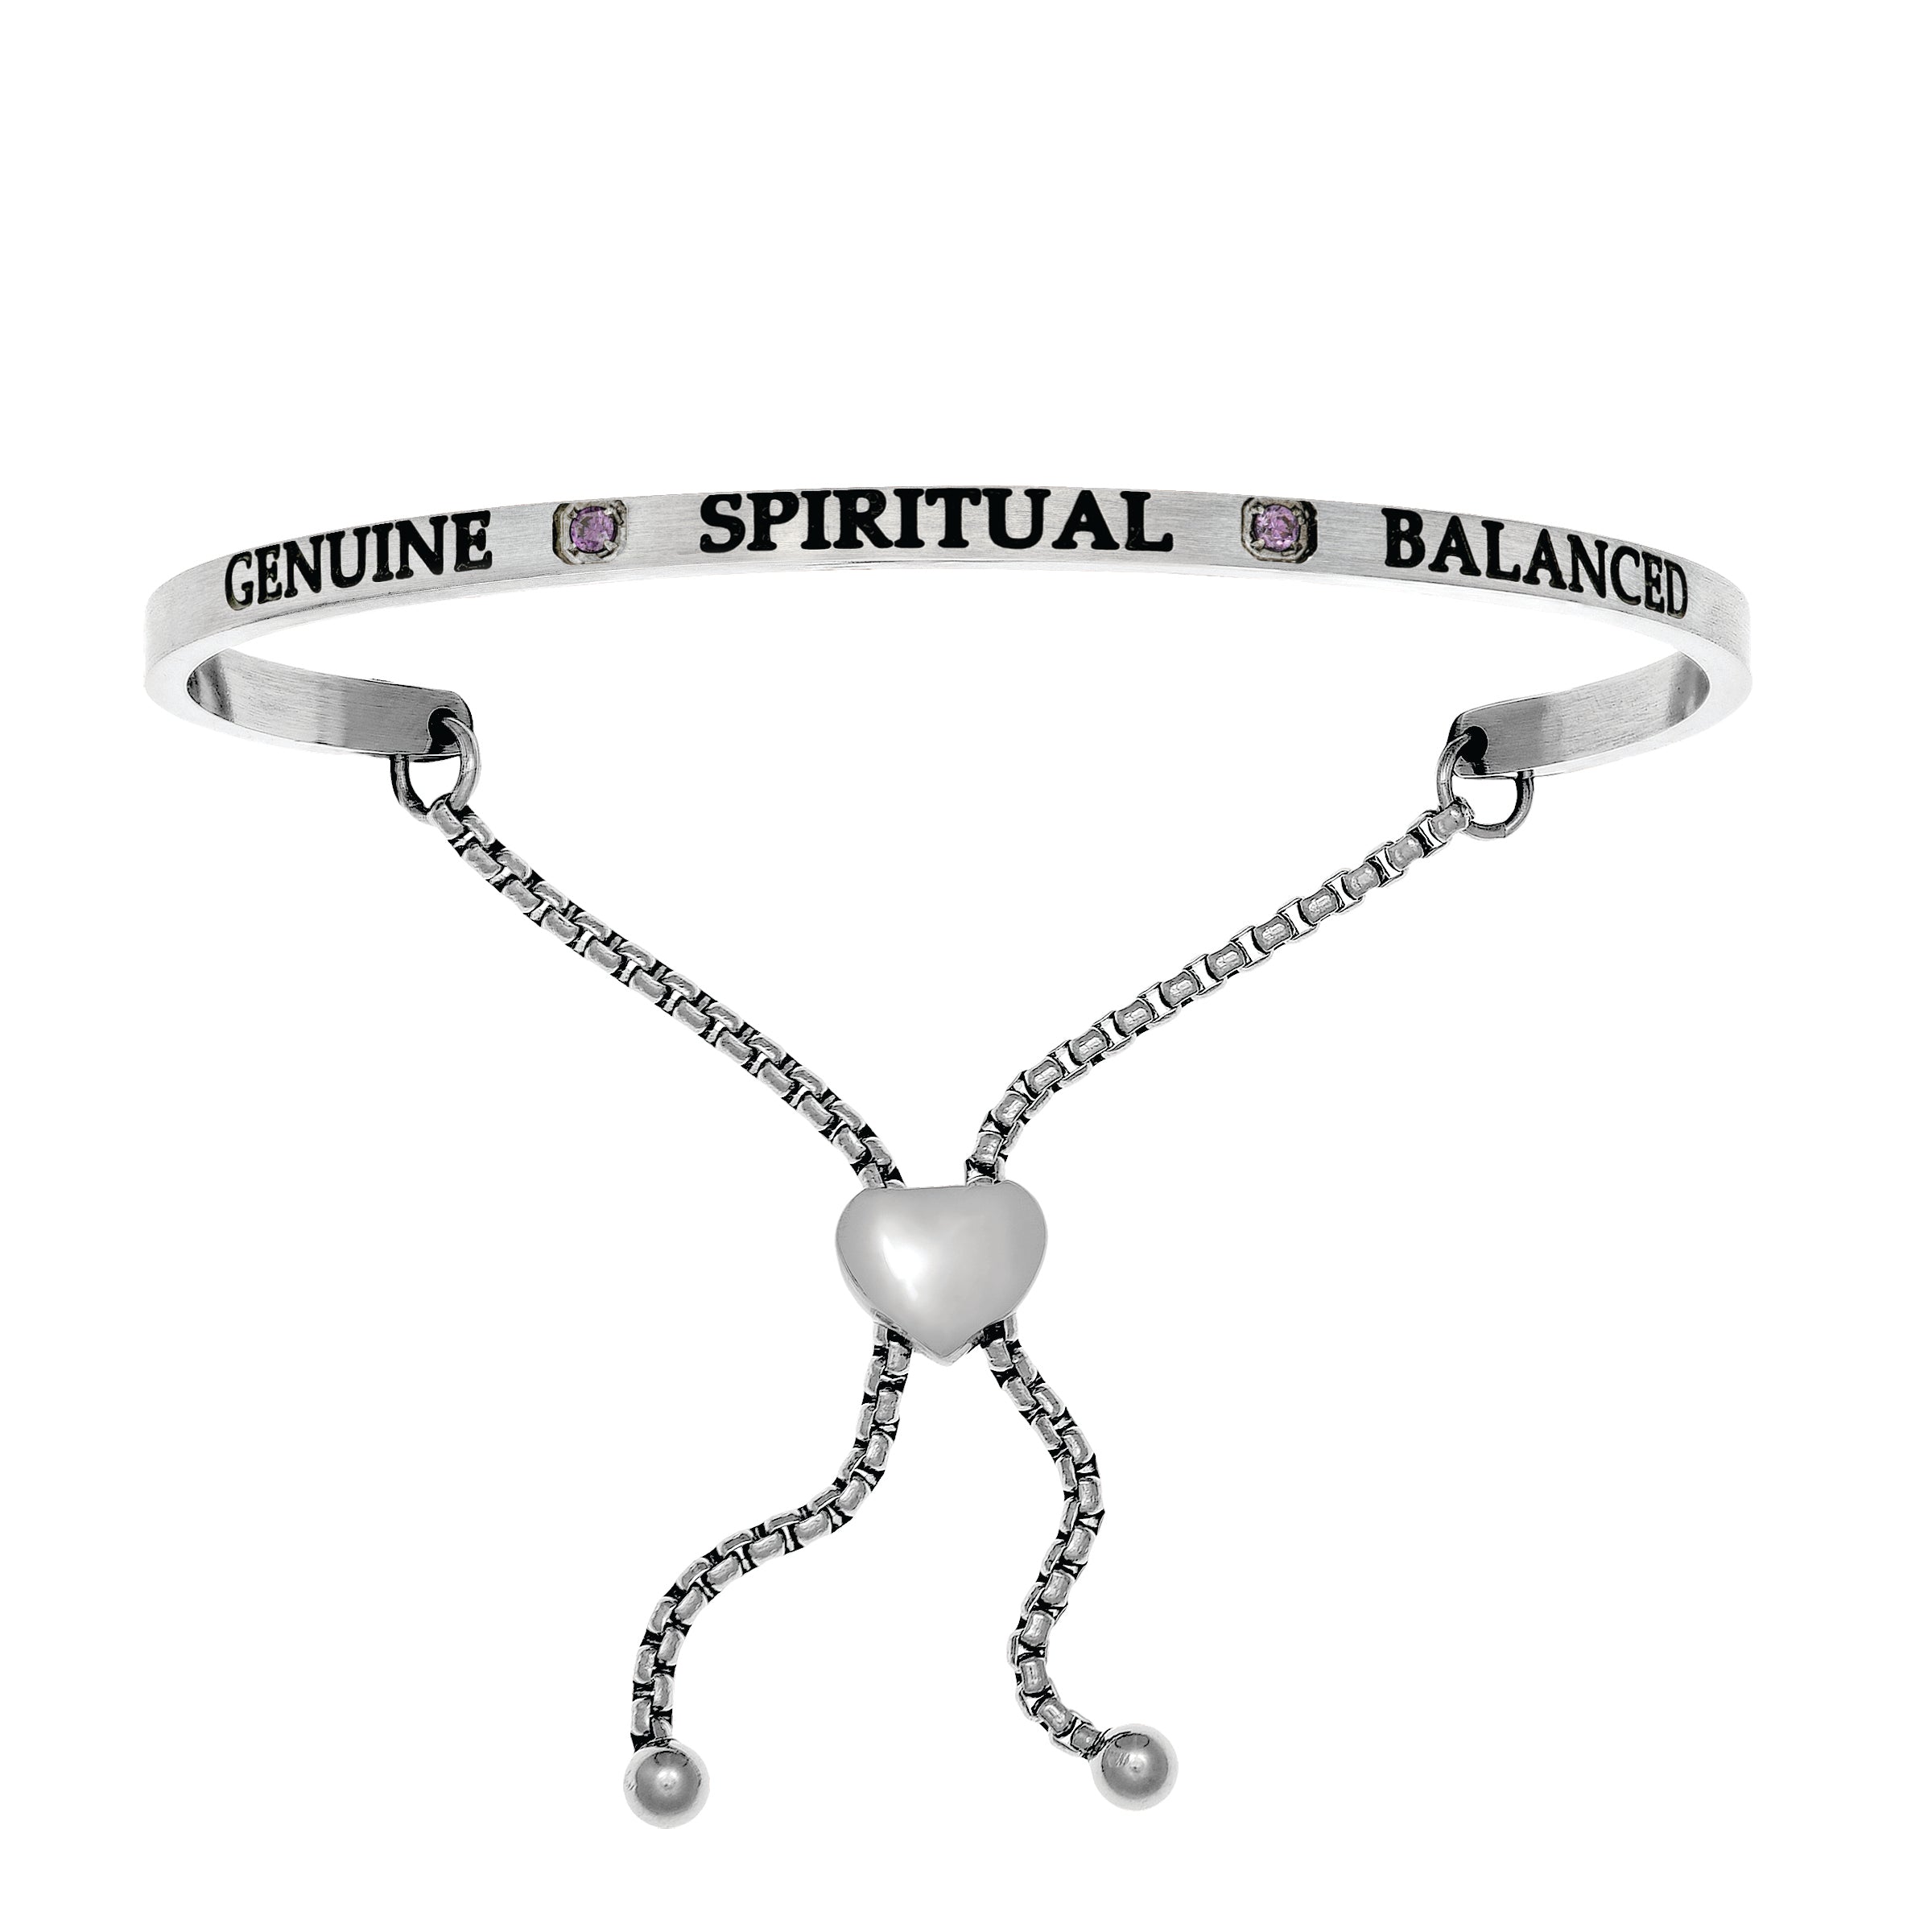 Intuitions Stainless Steel  Genuine, Spiritual, Balanced February Purple Birthstone Bangle Bracelet